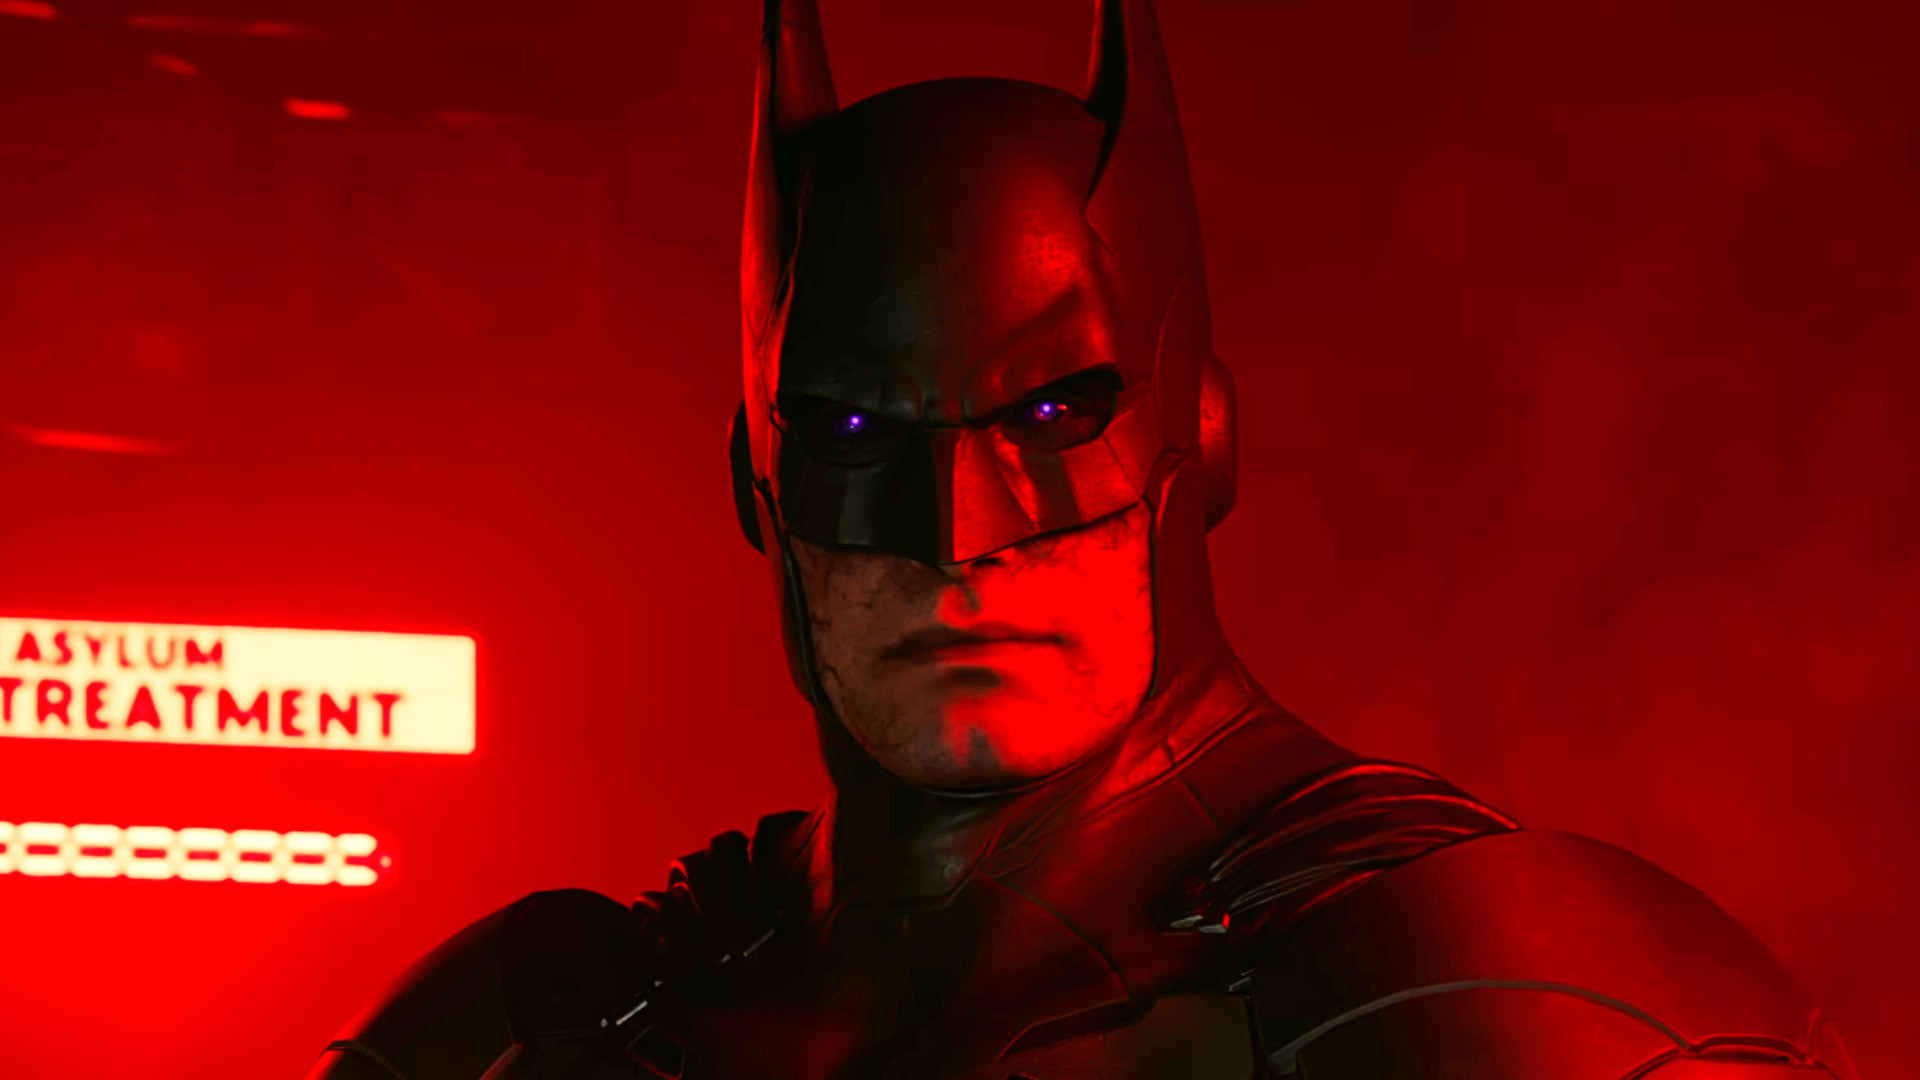 Suicide Squad release date trailer shows Kevin Conroy's Batman